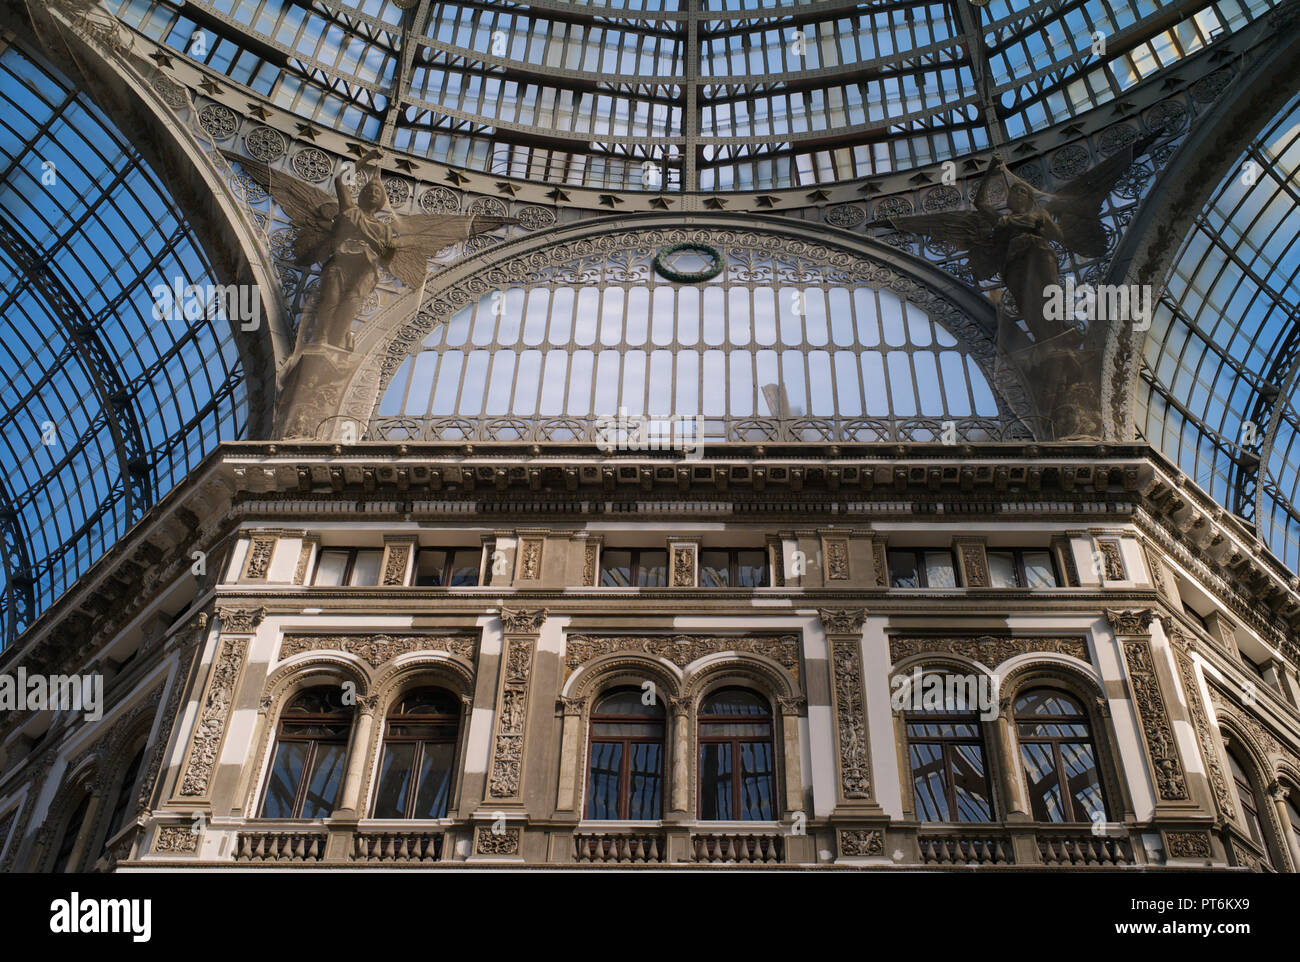 The Interior of the Galleria Umberto I in Naples, Italy Stock Photo